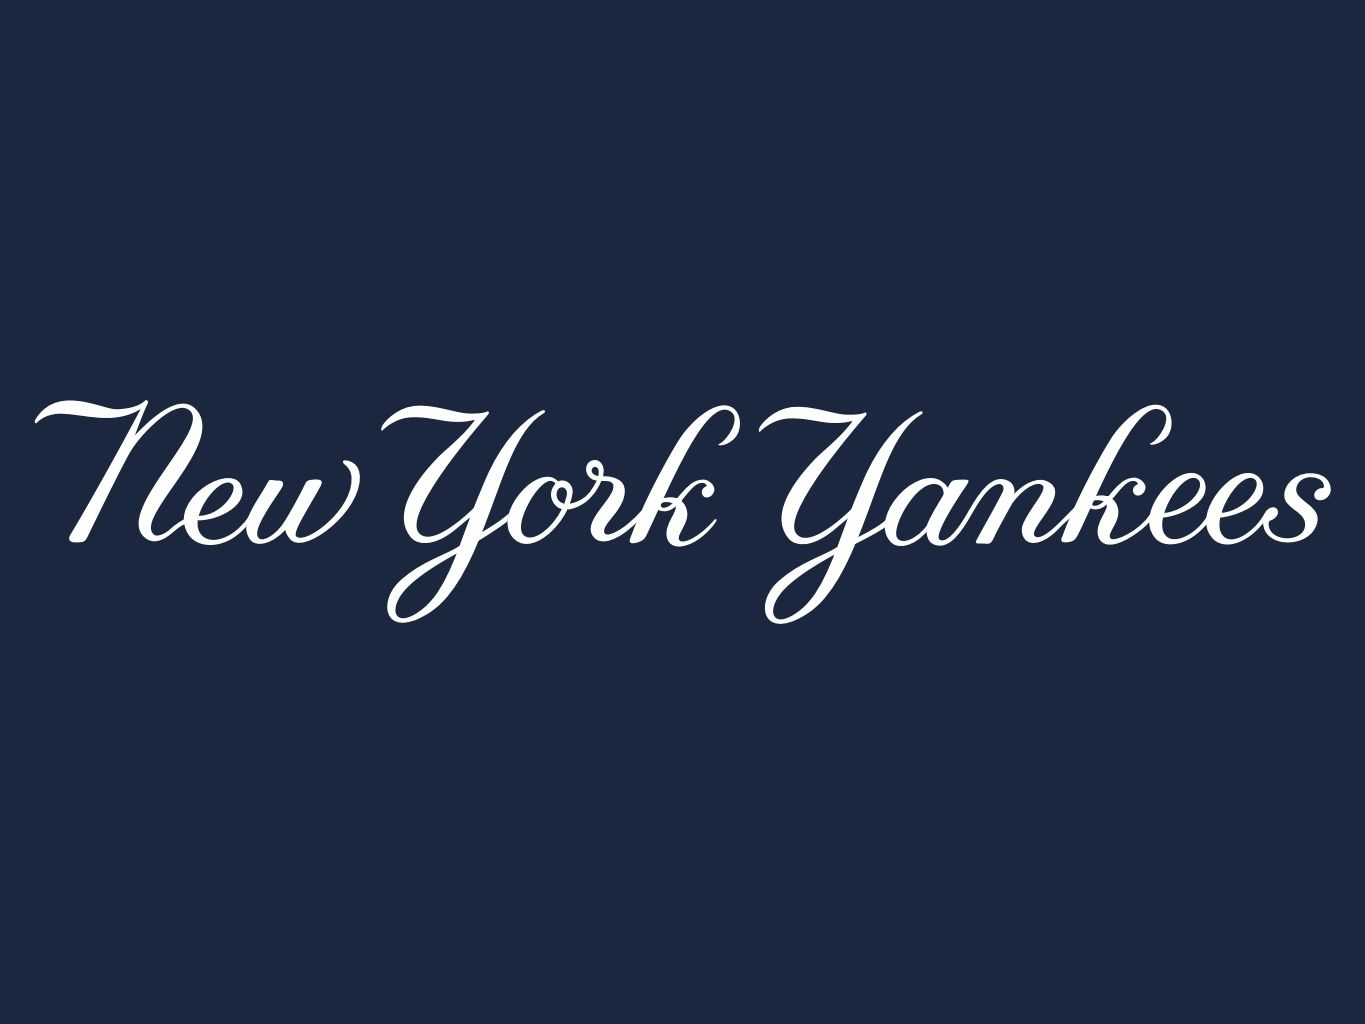 New York Yankees Wallpaper 3611 1365x1024 px ~ WallpaperFort.com